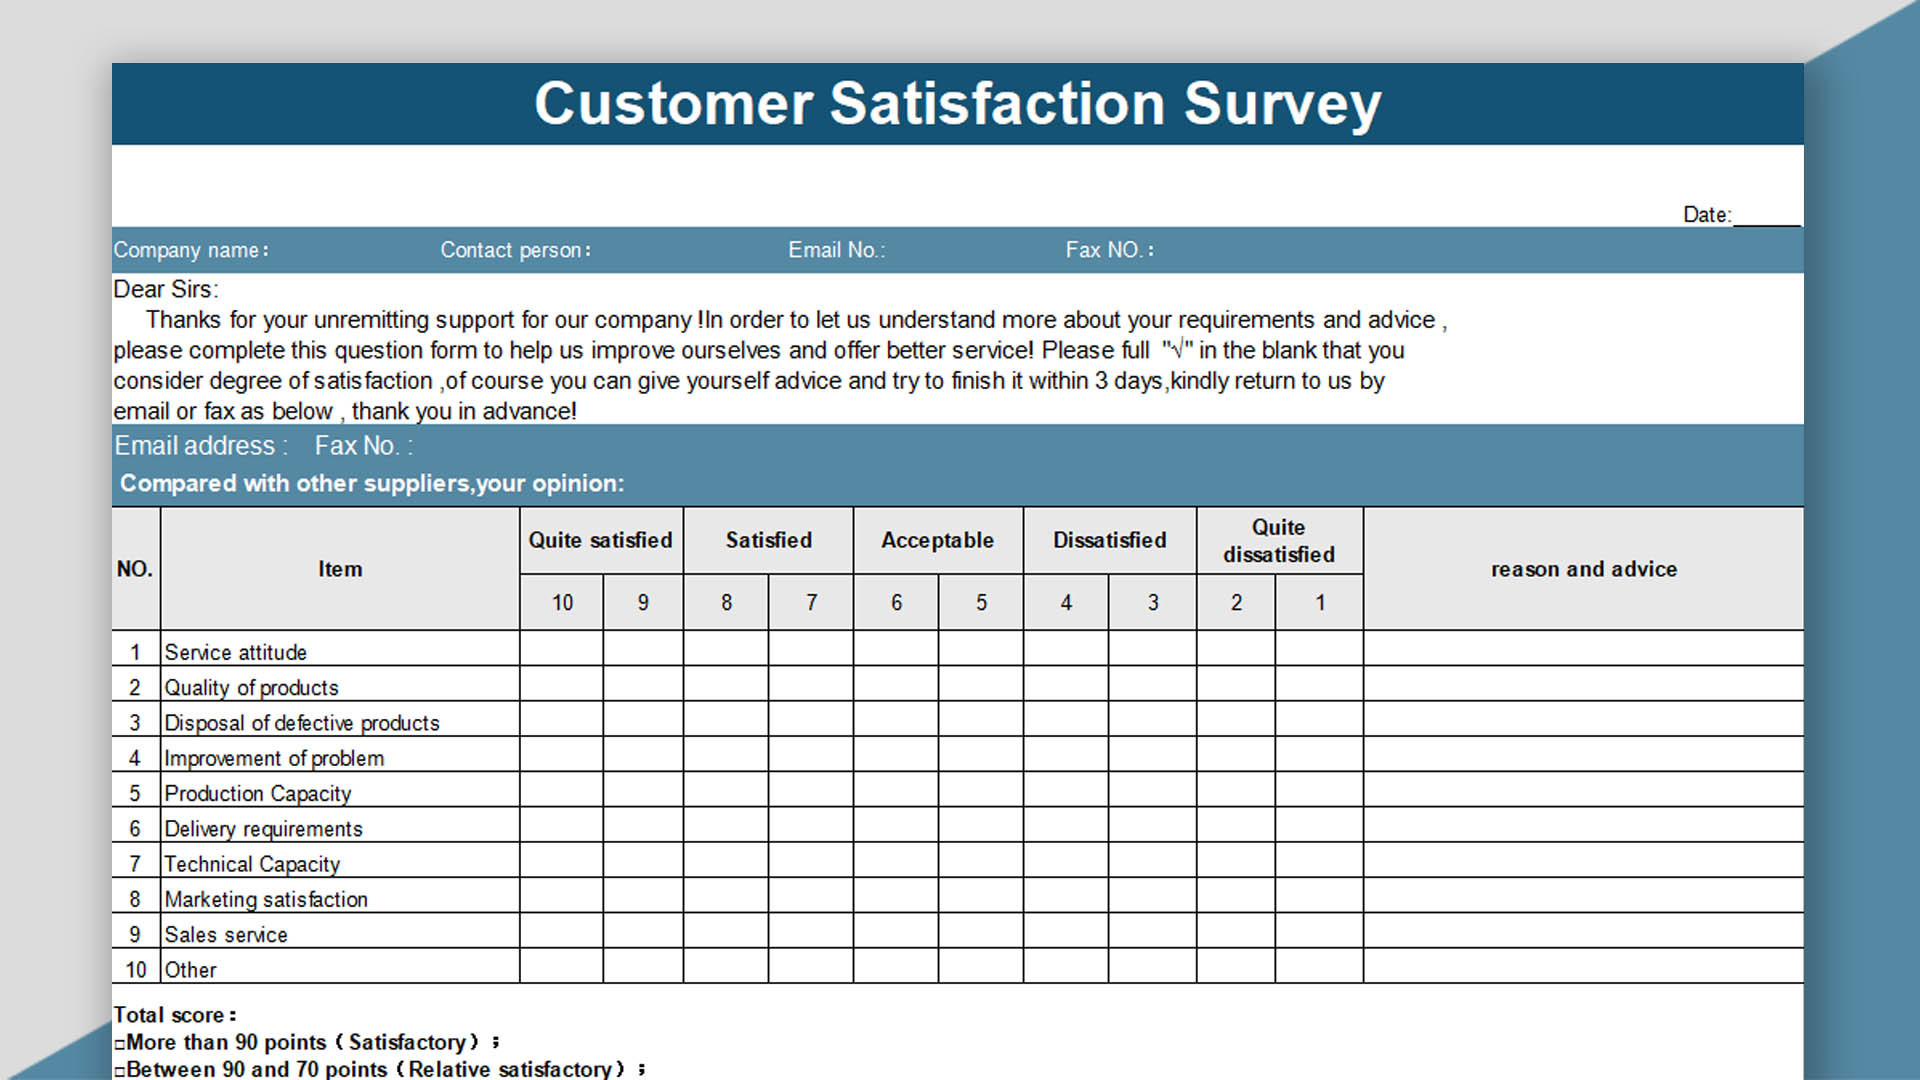 EXCEL of Customer Satisfaction Survey